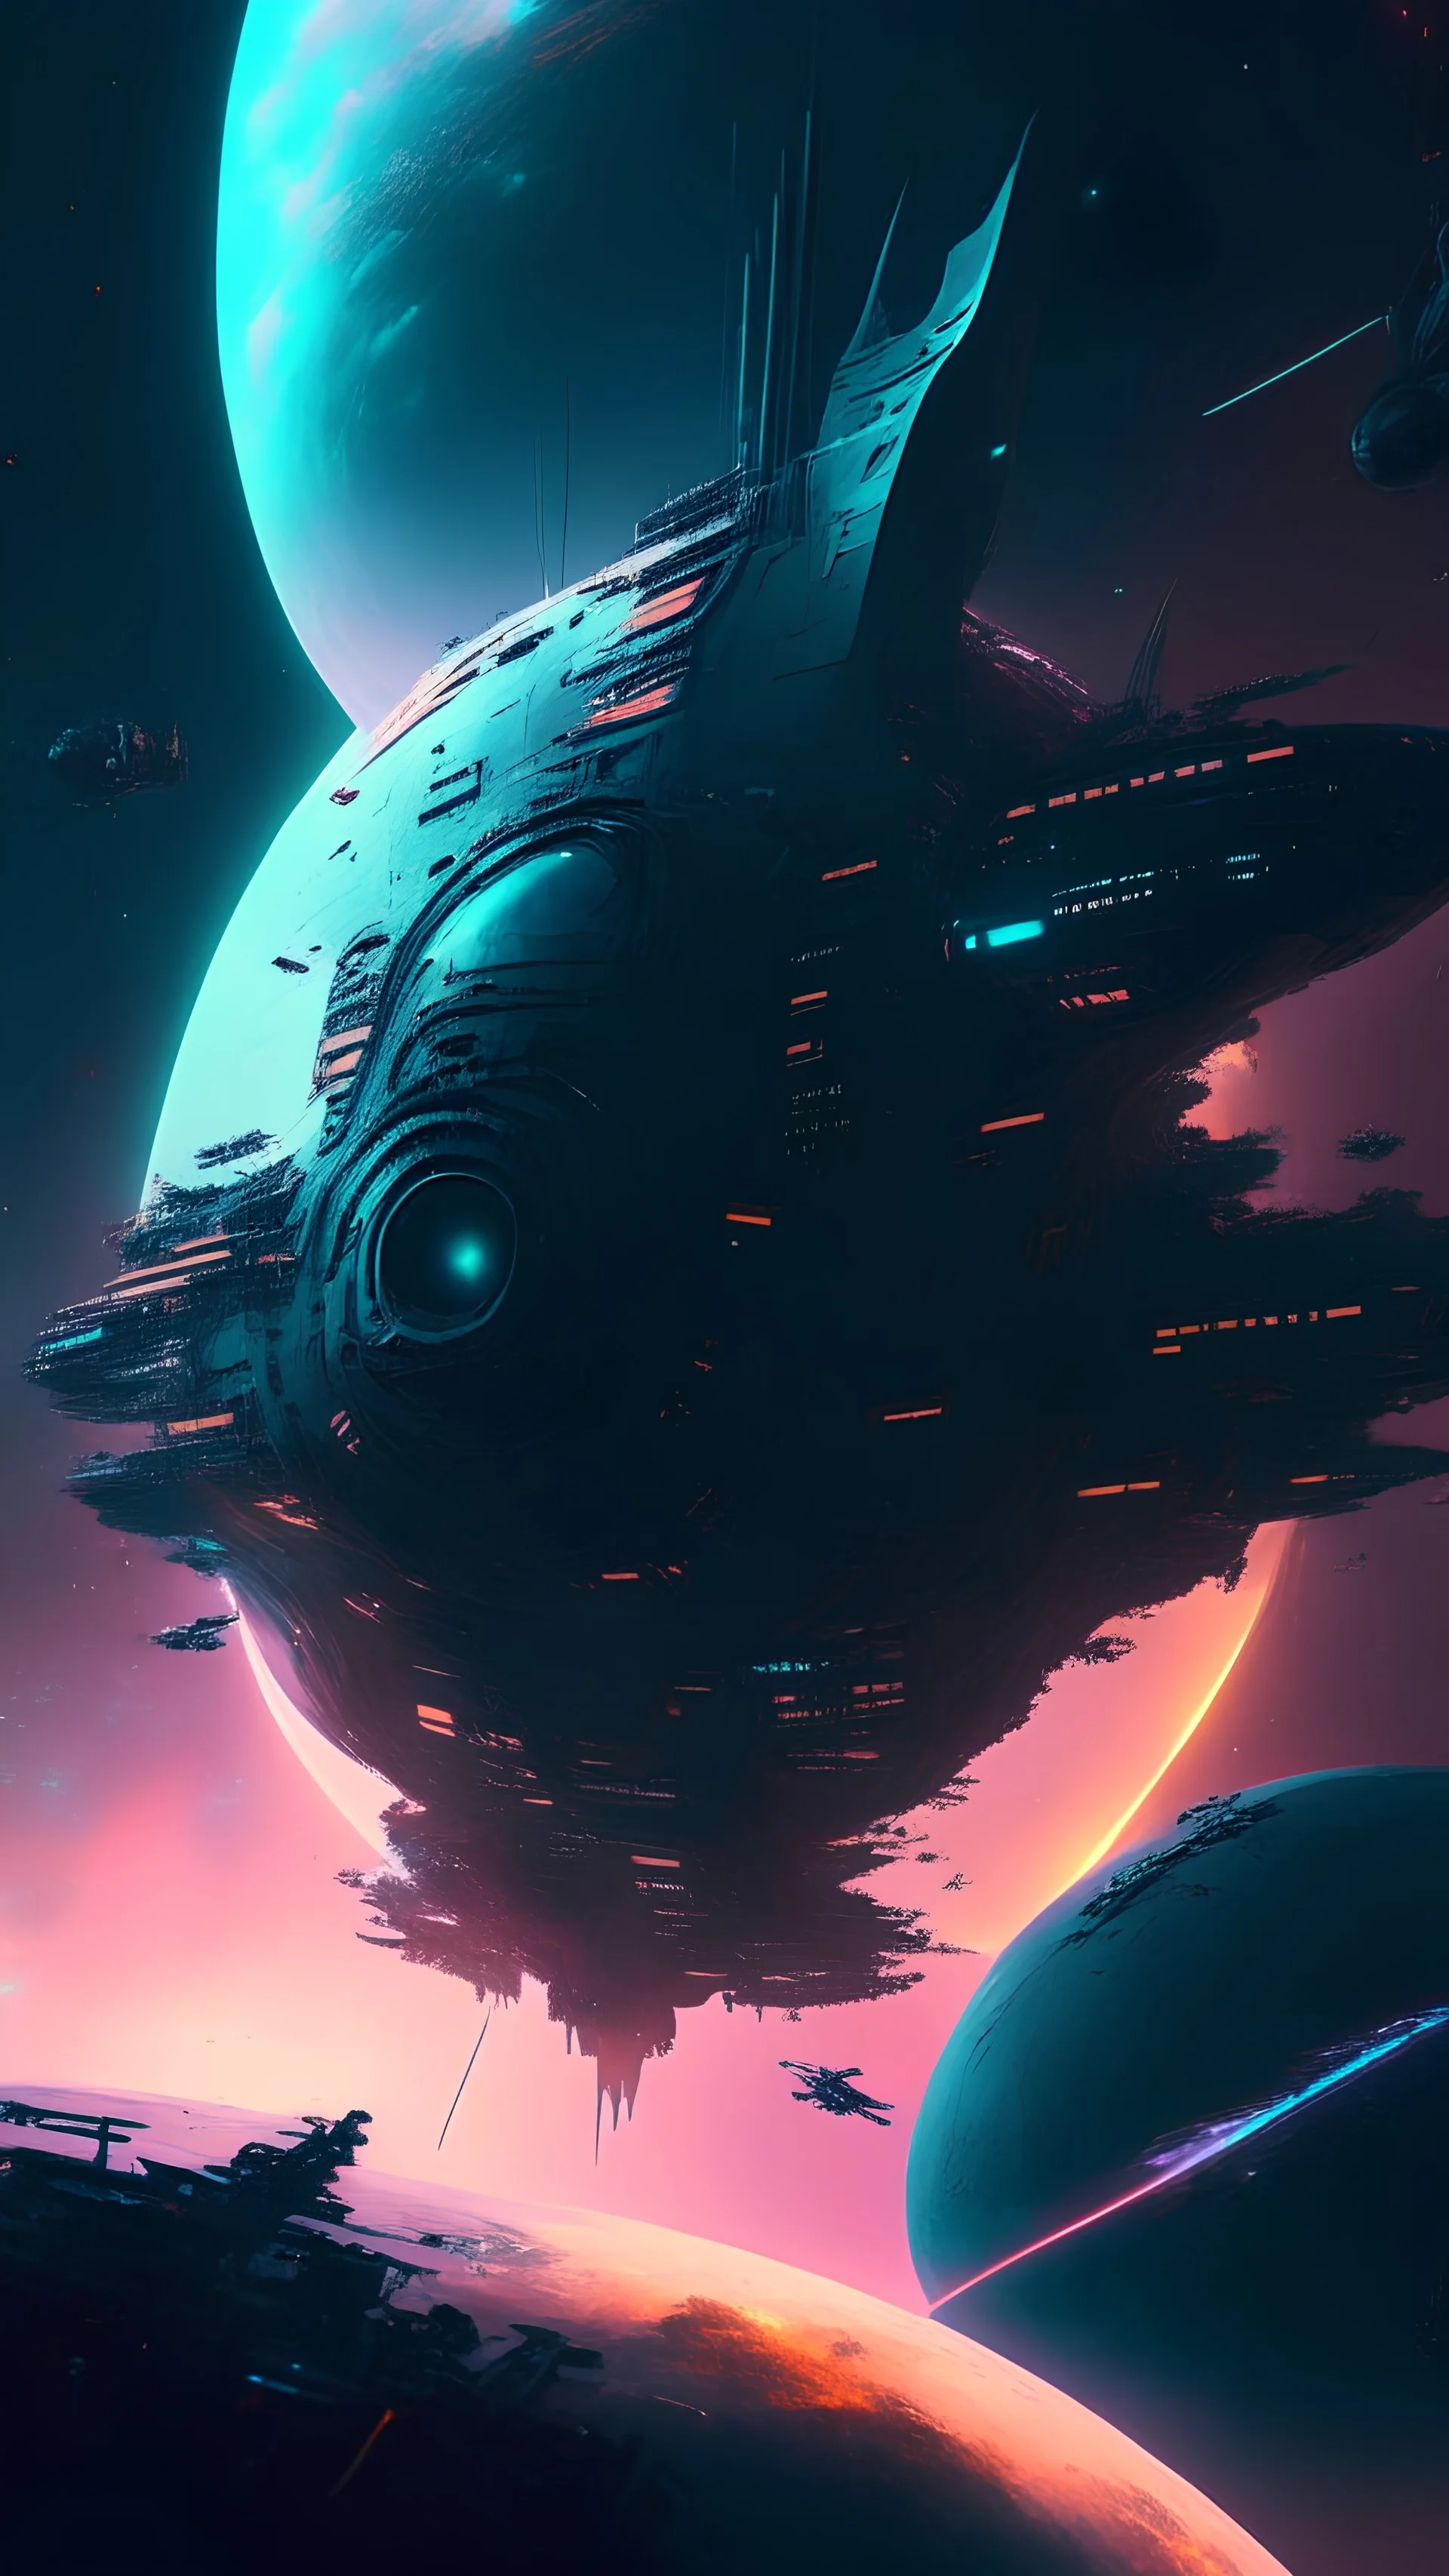 Arrival of spaceship cyberpunk planet digital art, 4k